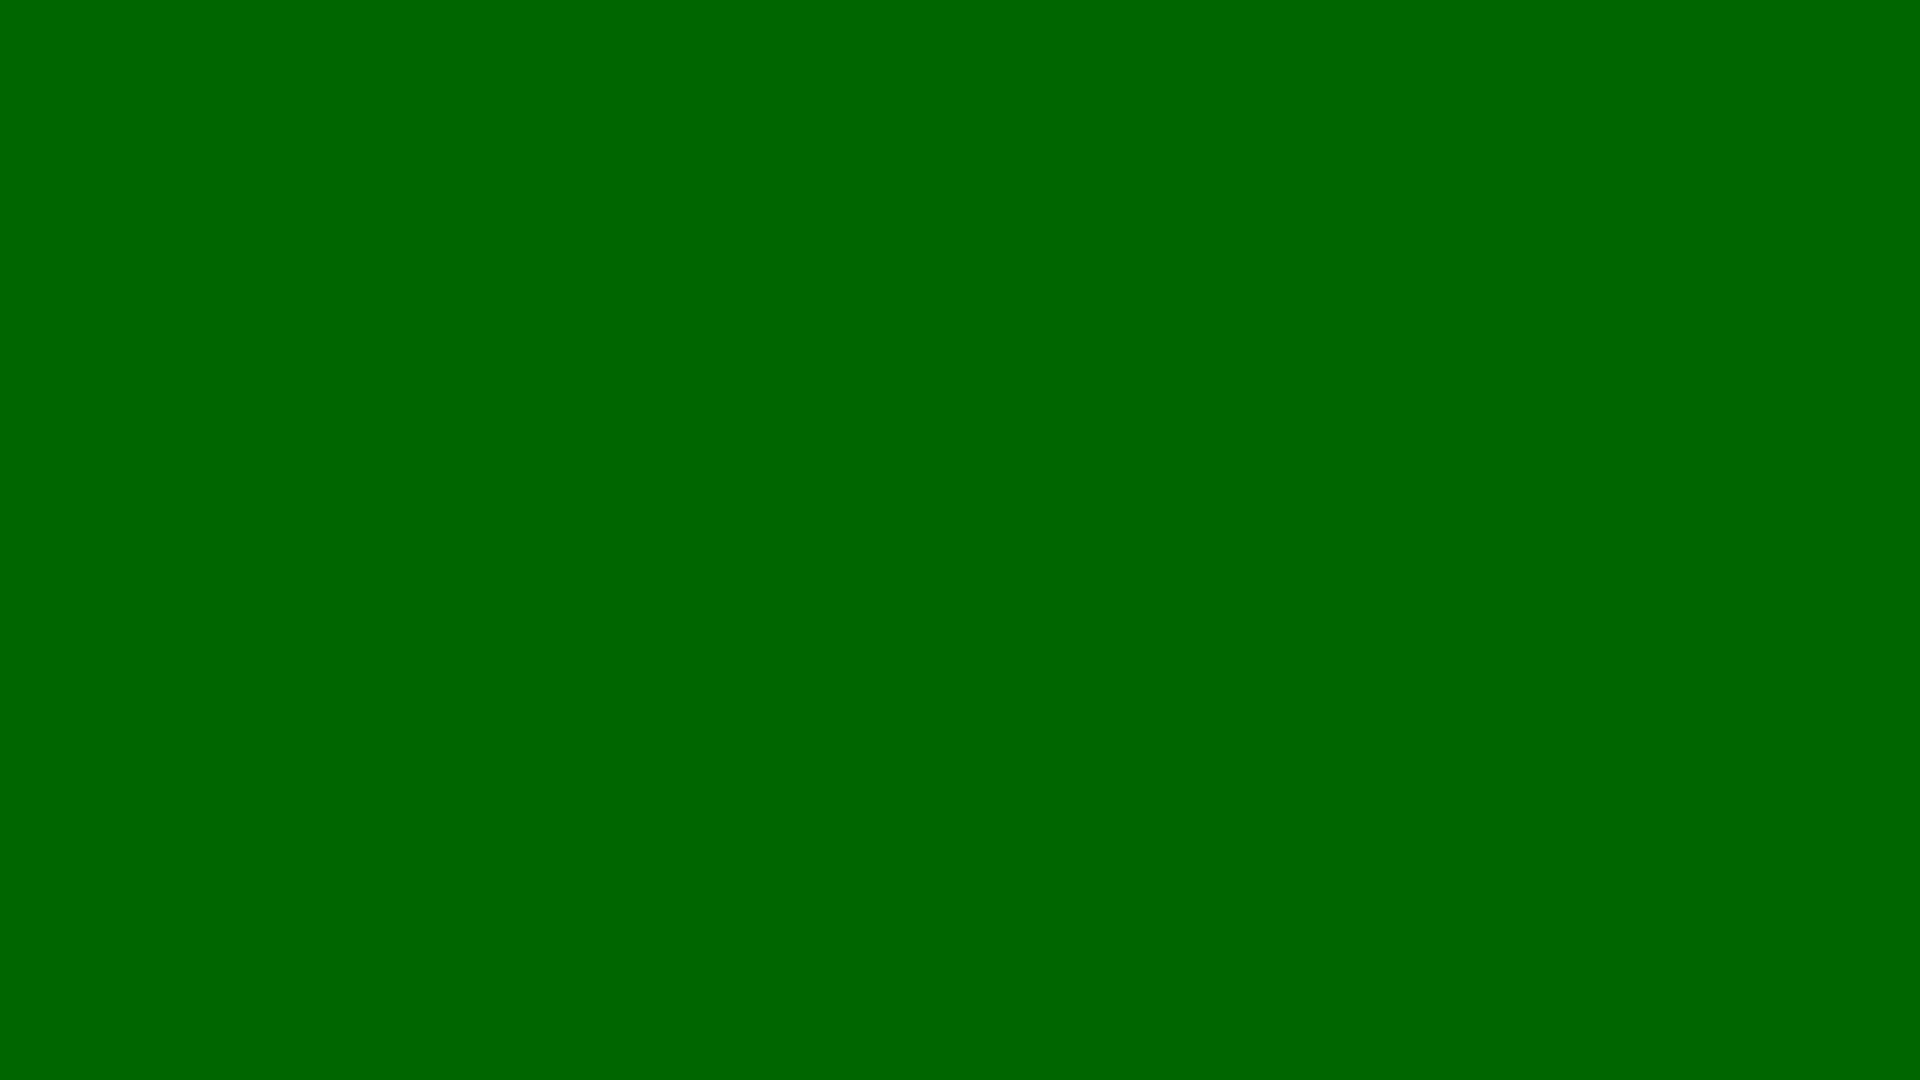 Pakistan Green